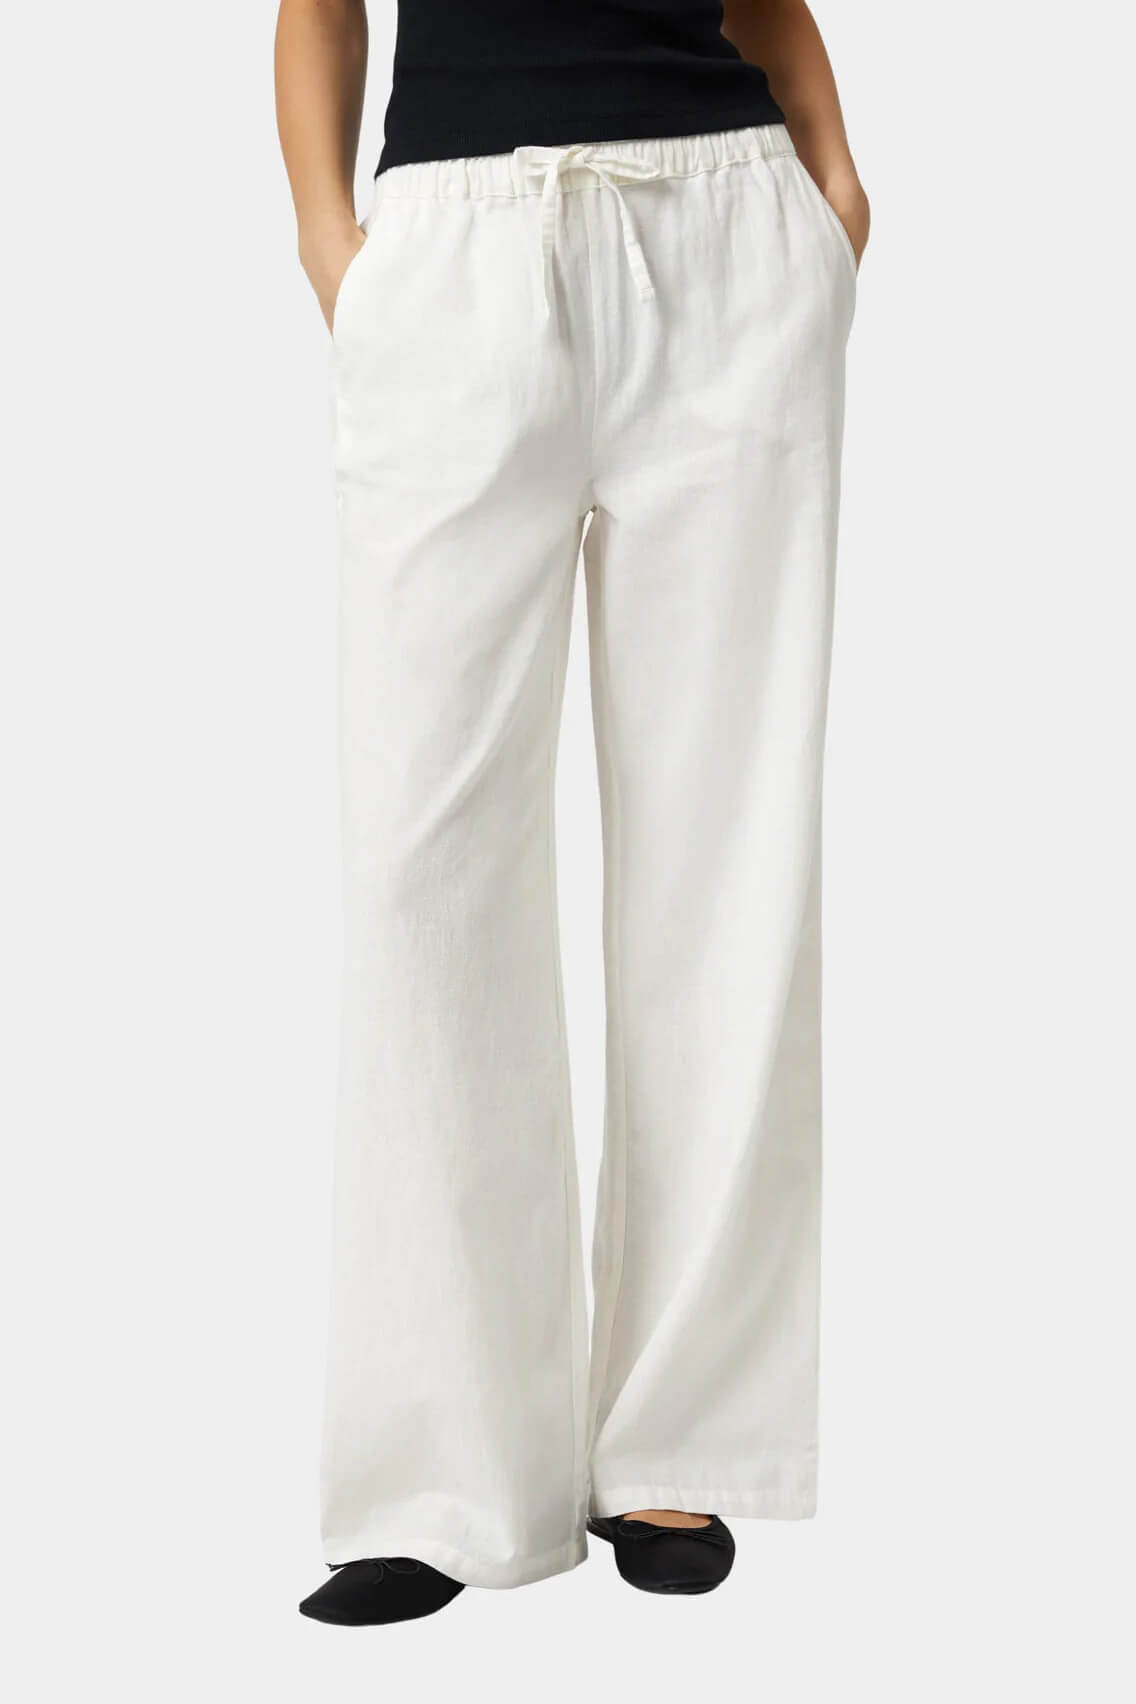 Mavi woven pant in white